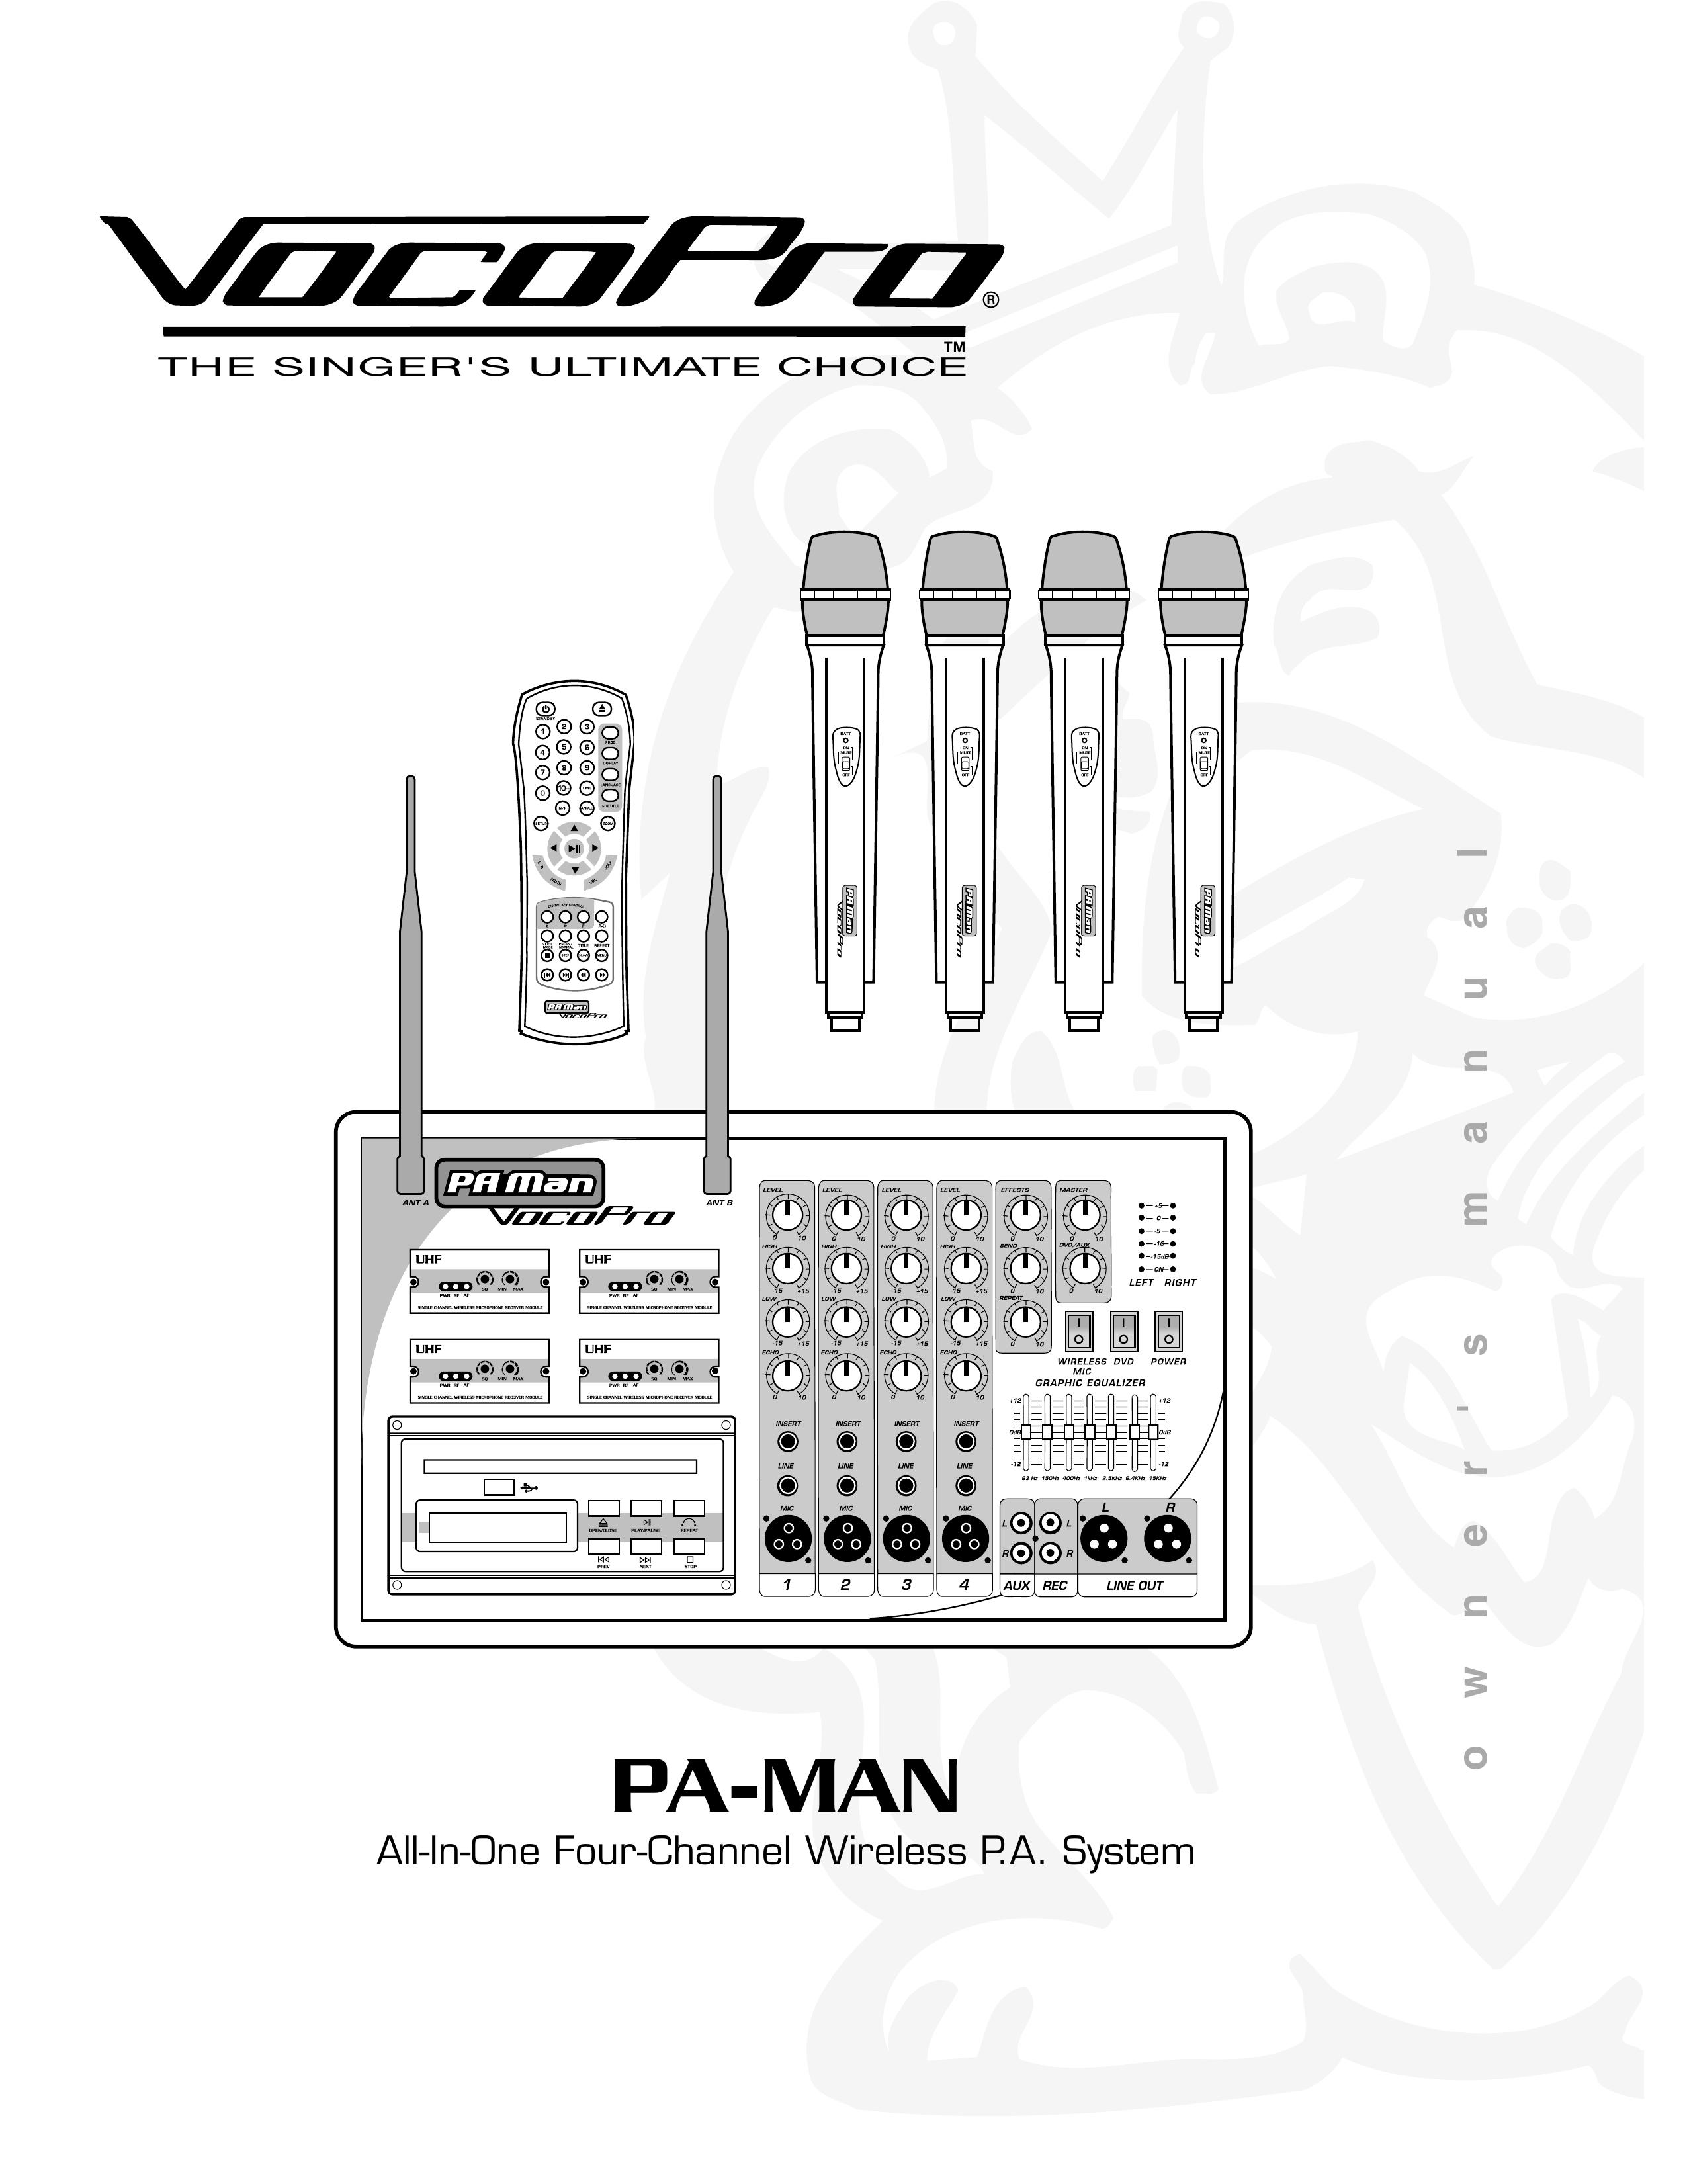 VocoPro PA-MAN DJ Equipment User Manual